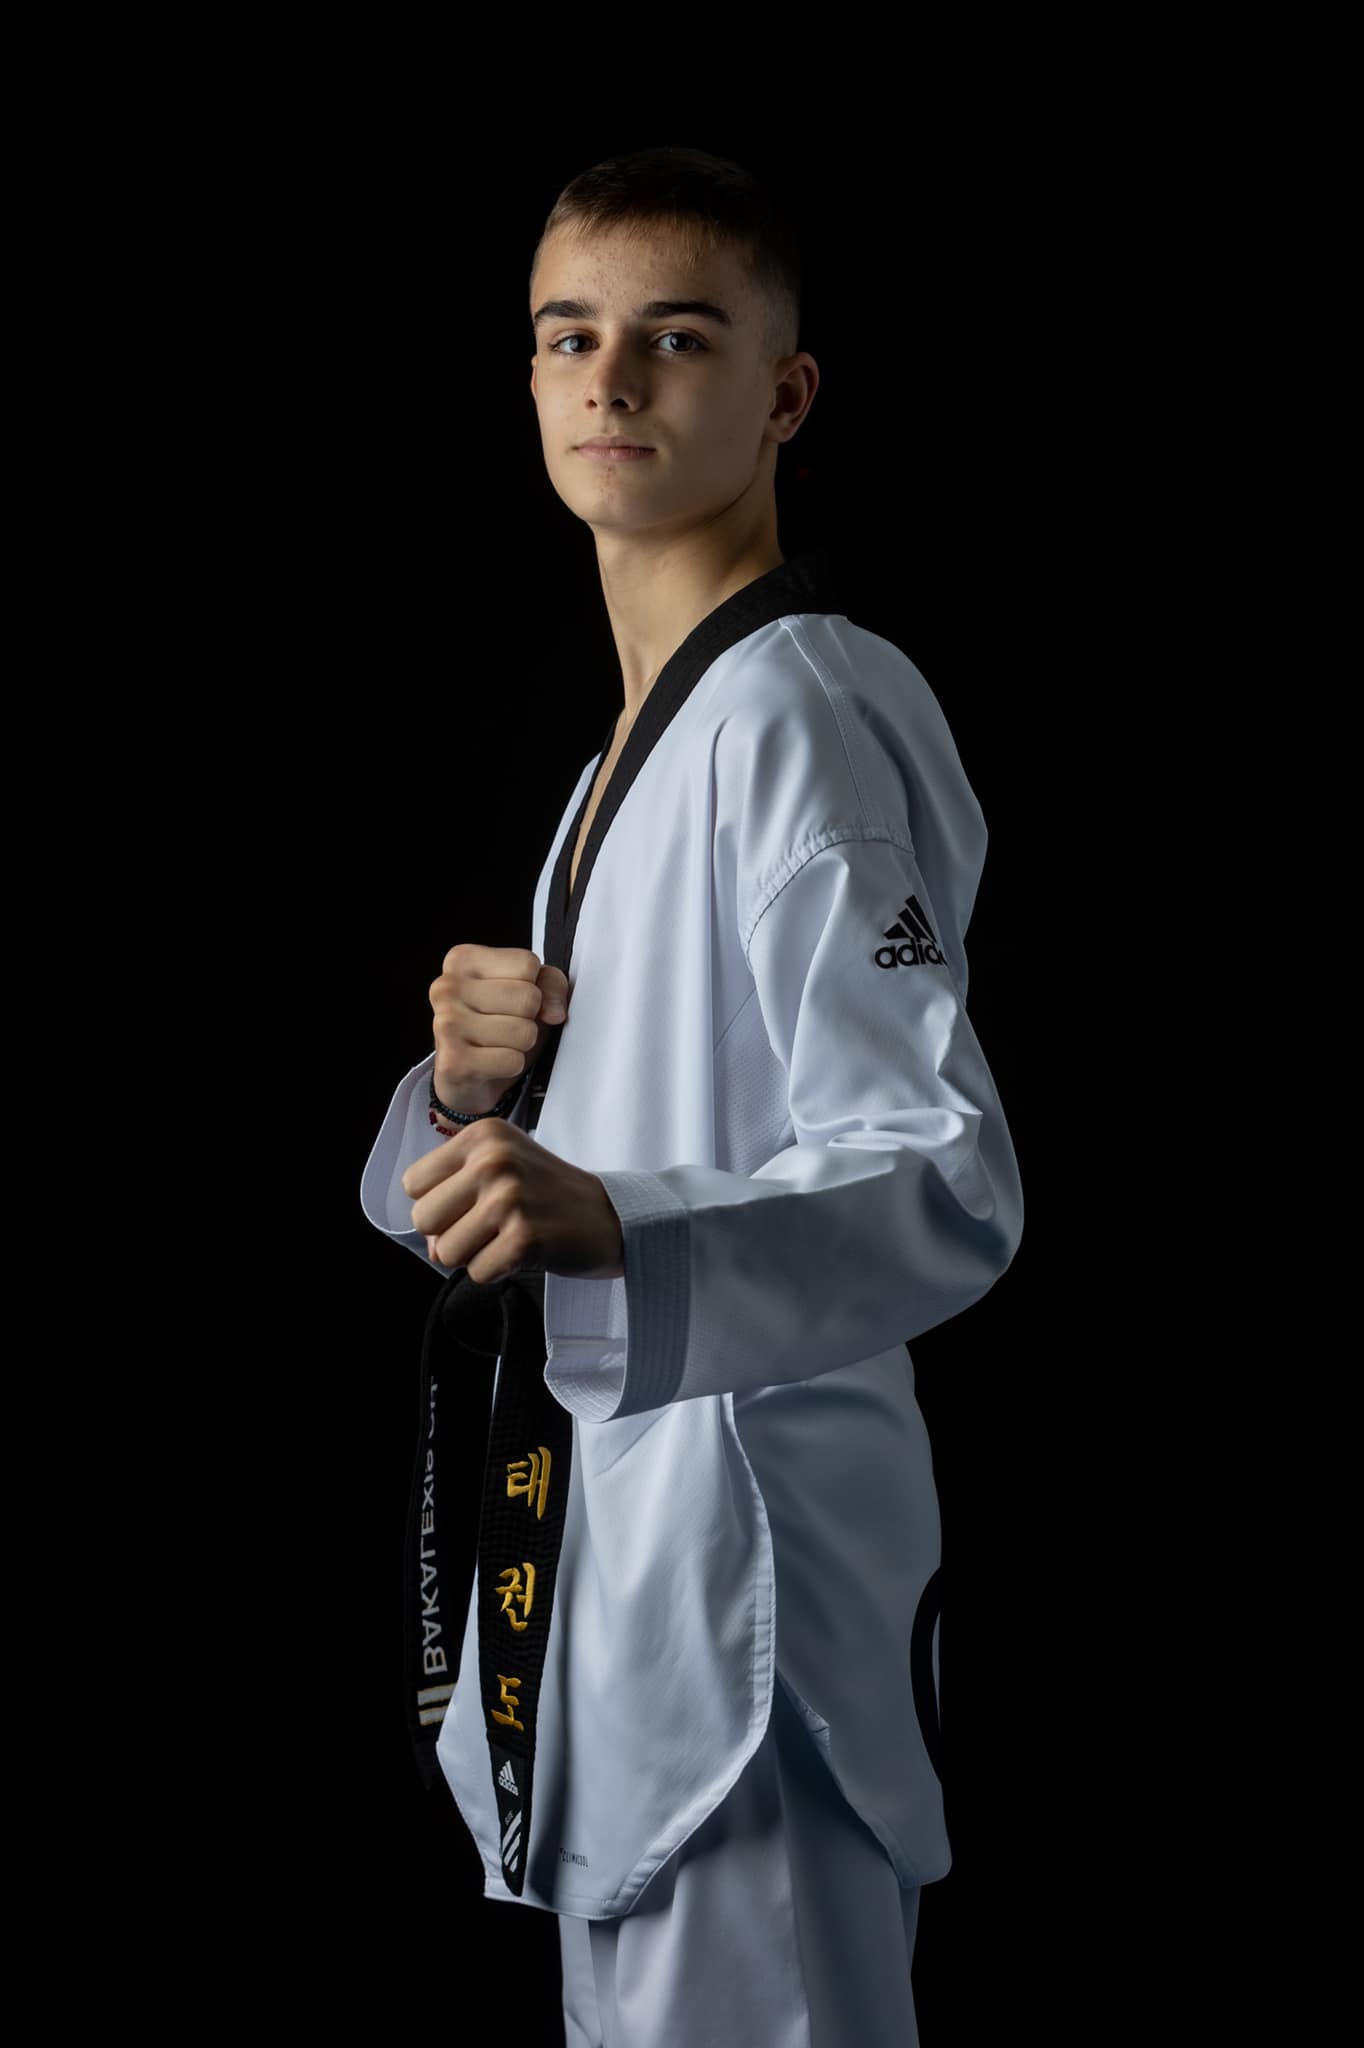 axilleas-taekwondo-aigaleo-01-sportshunter